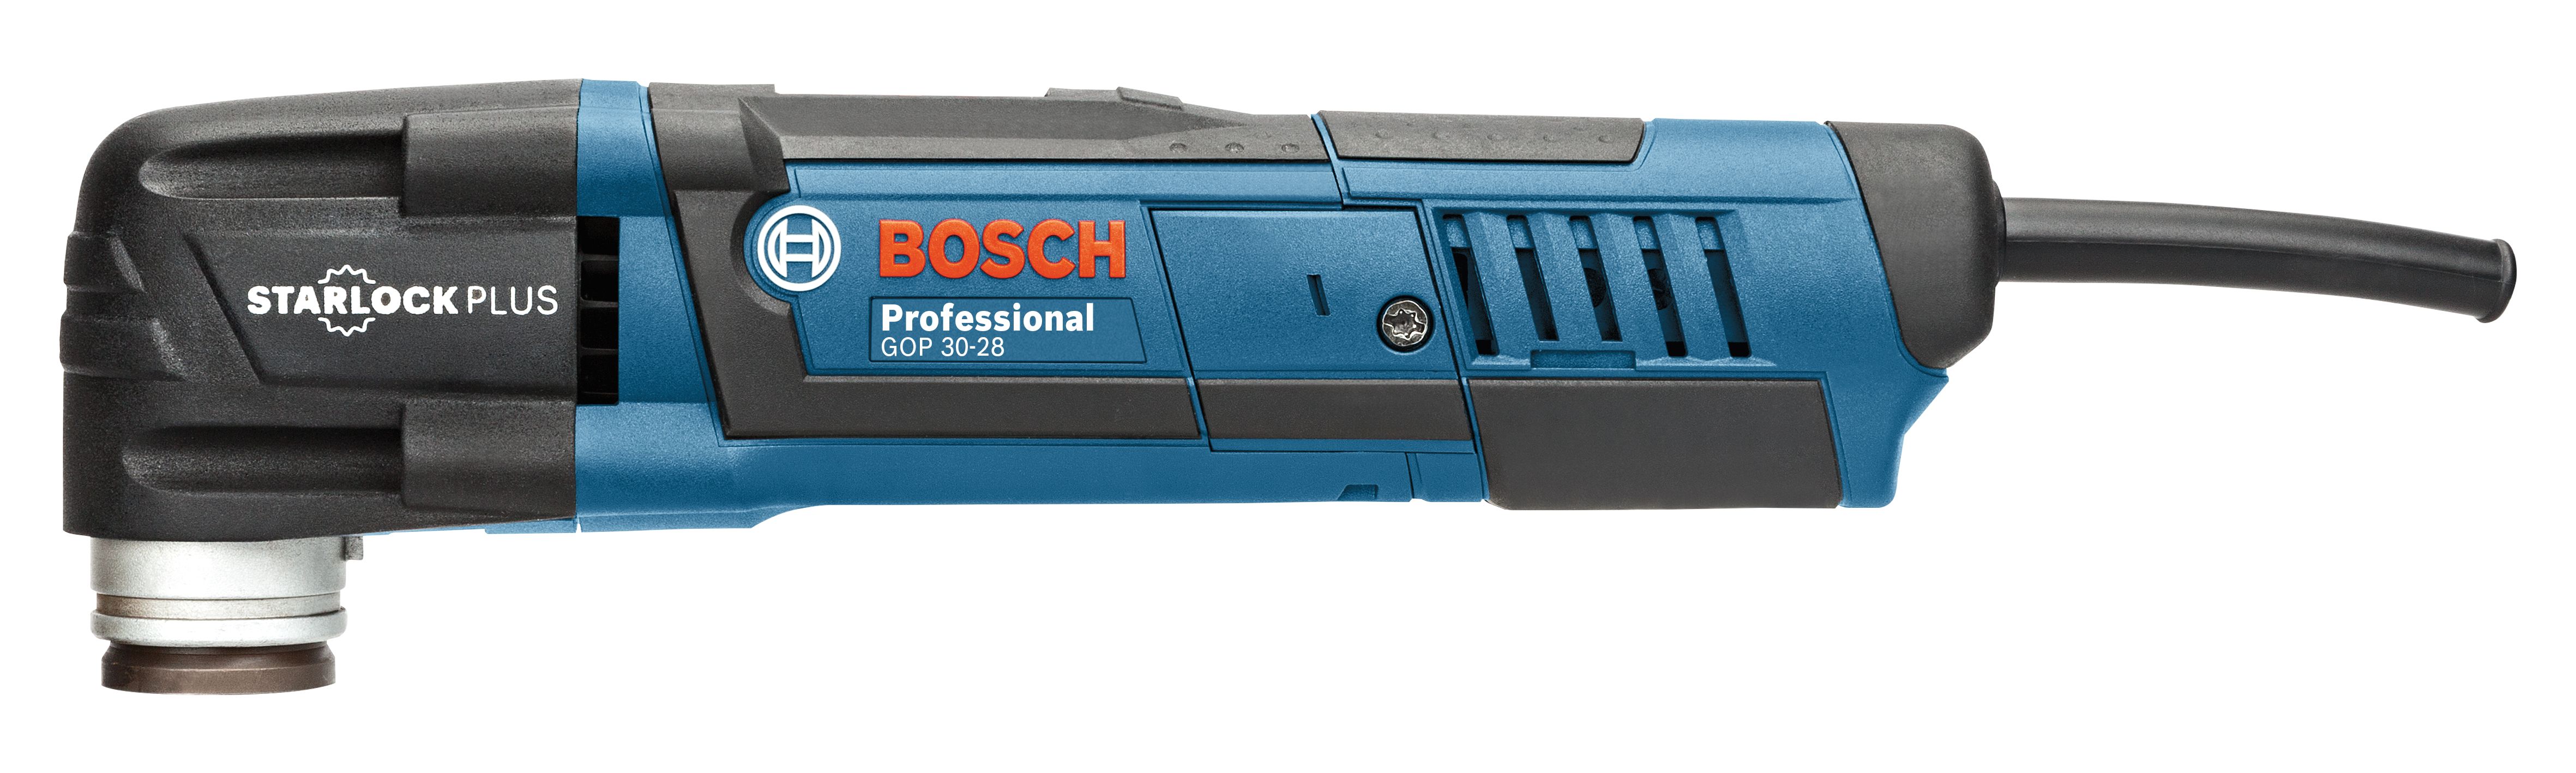 Image of Bosch Professional GOP 30-28 Multi Tool - 300W